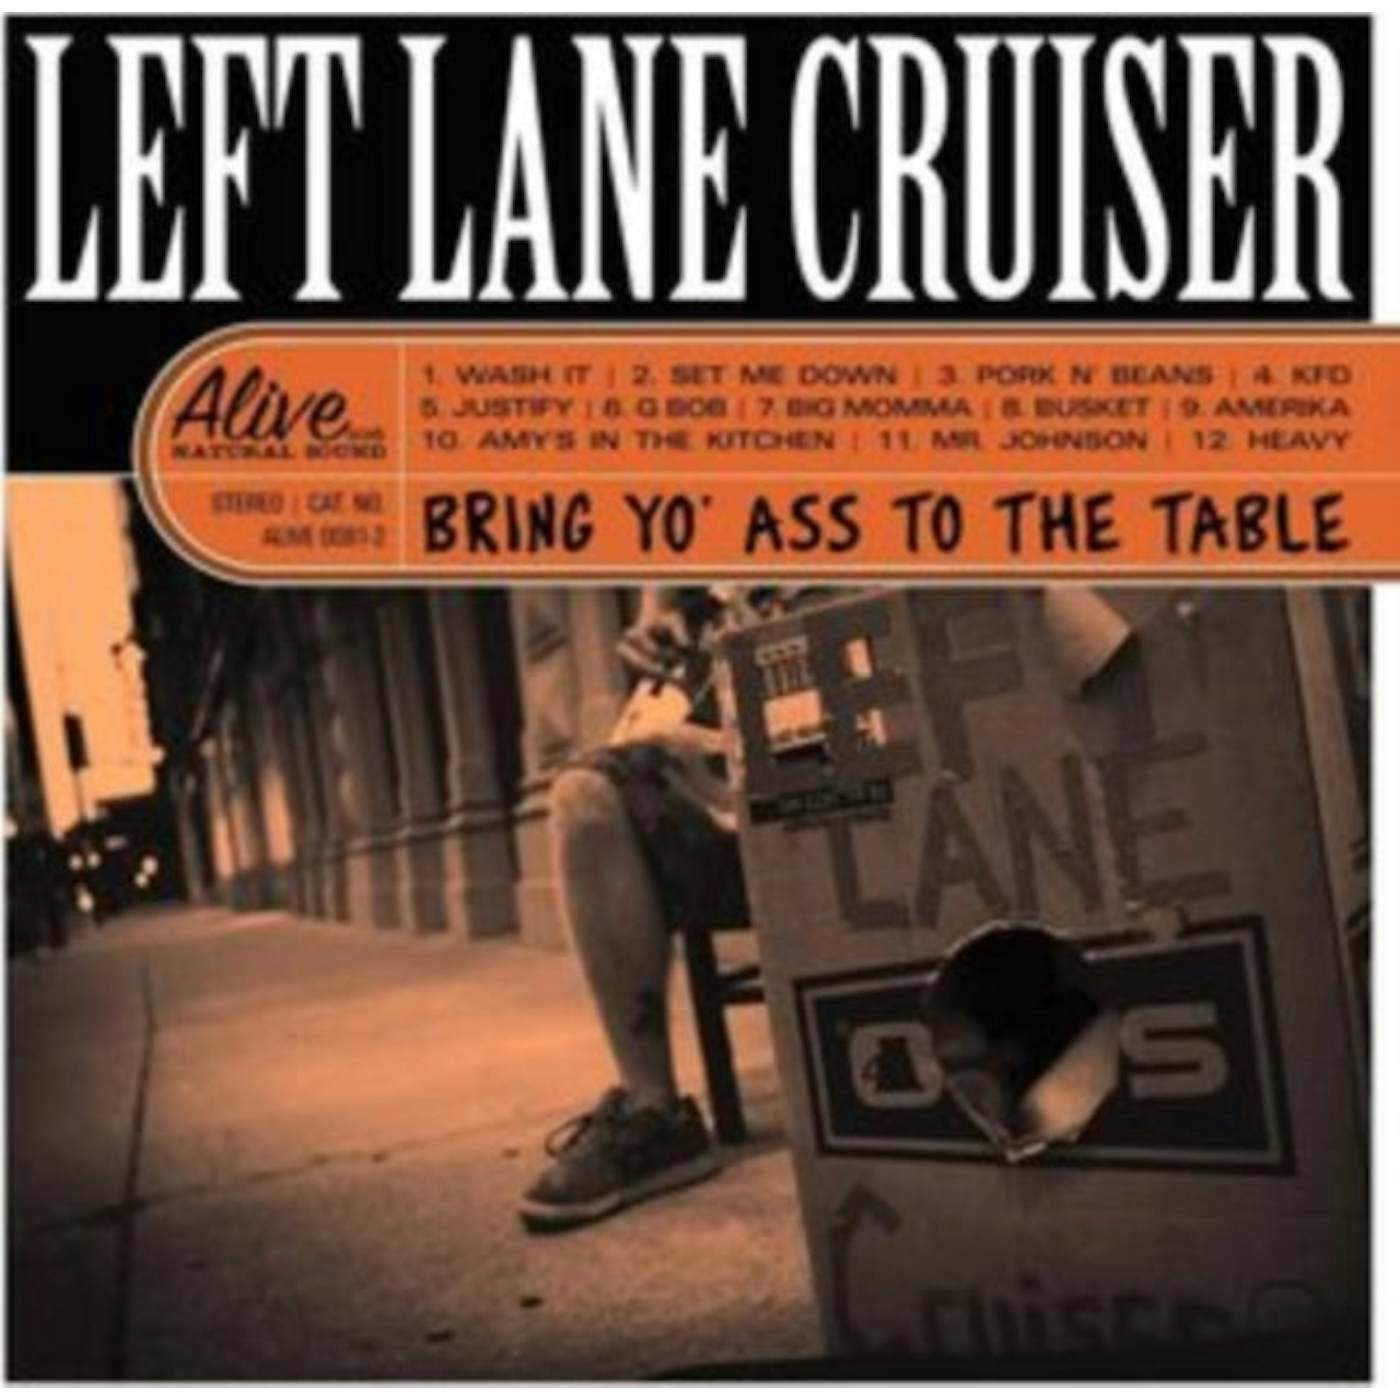 Left Lane Cruiser LP - Bring Yo Ass To The Table (Vinyl)